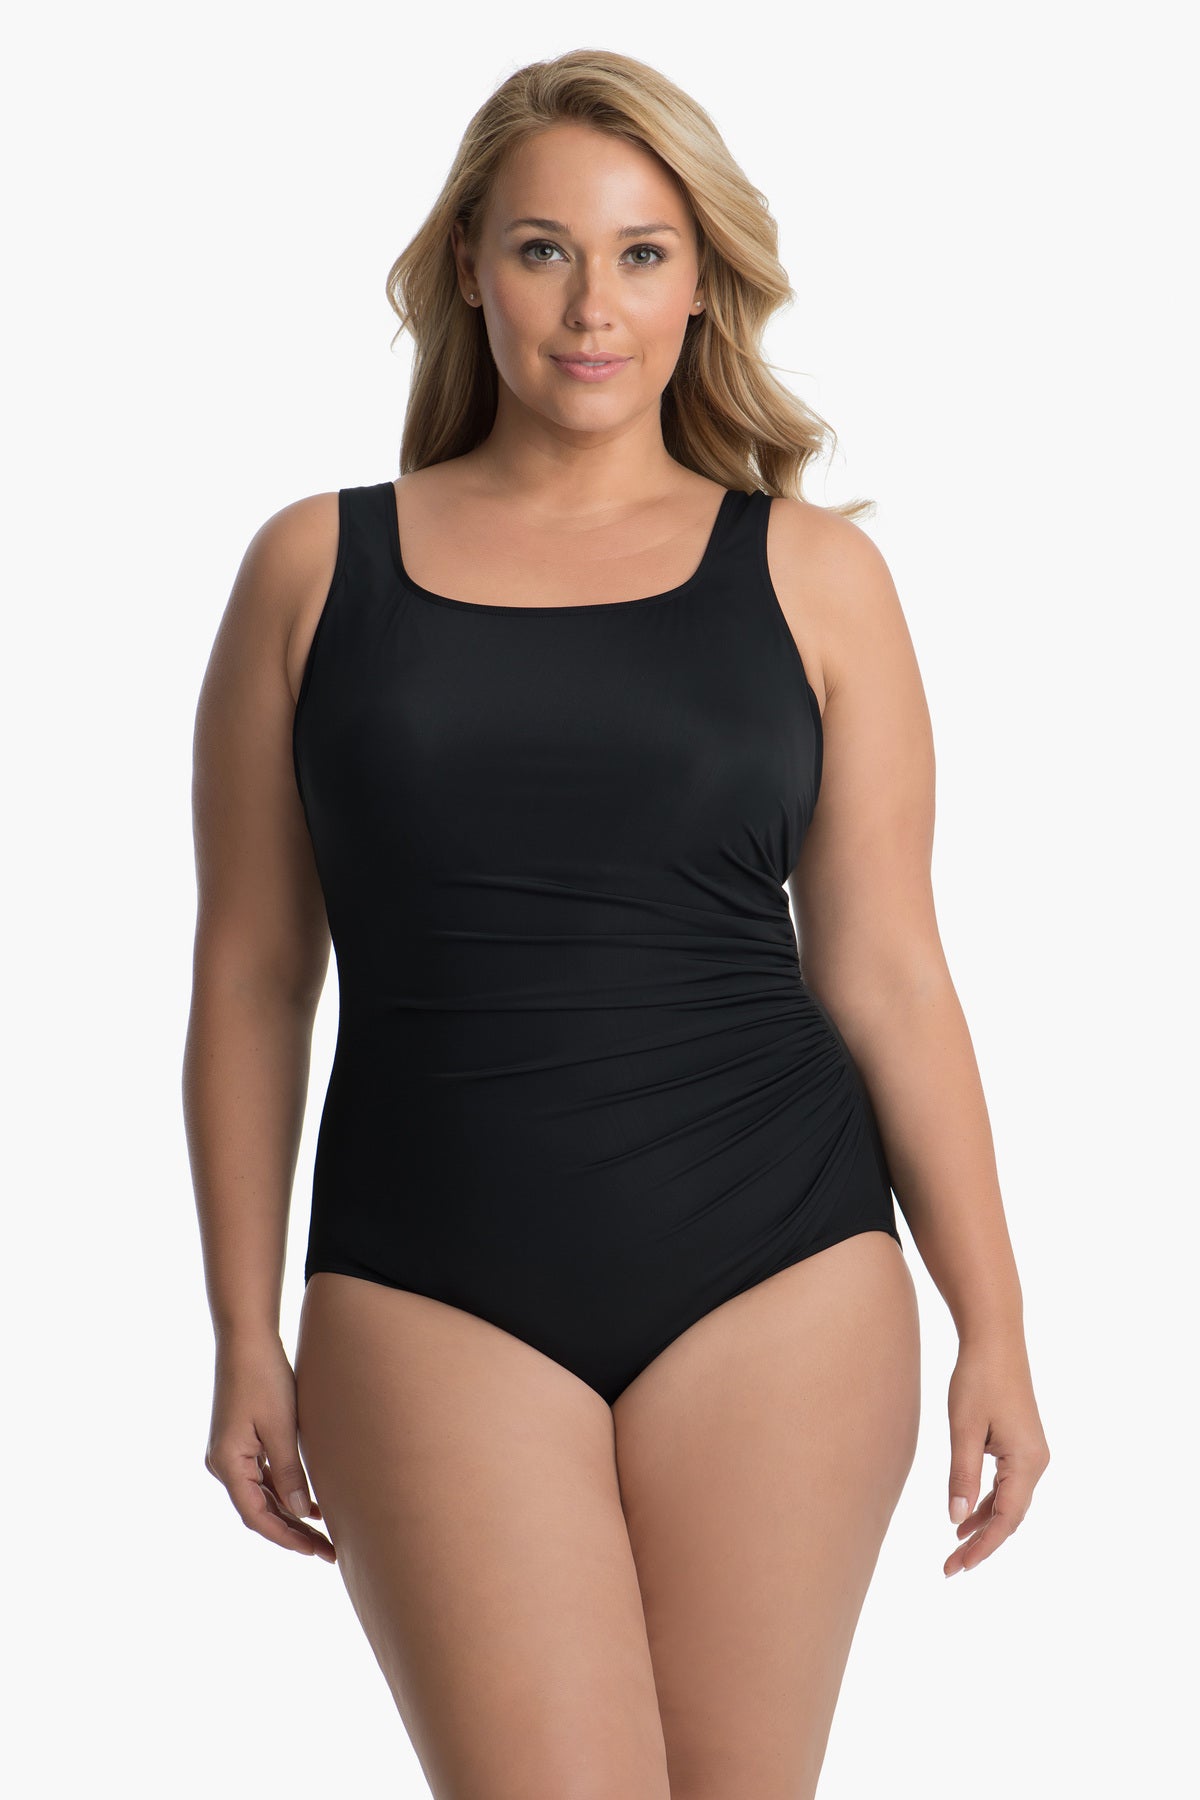 BN Plus Size Maternity Swimwear BLACK